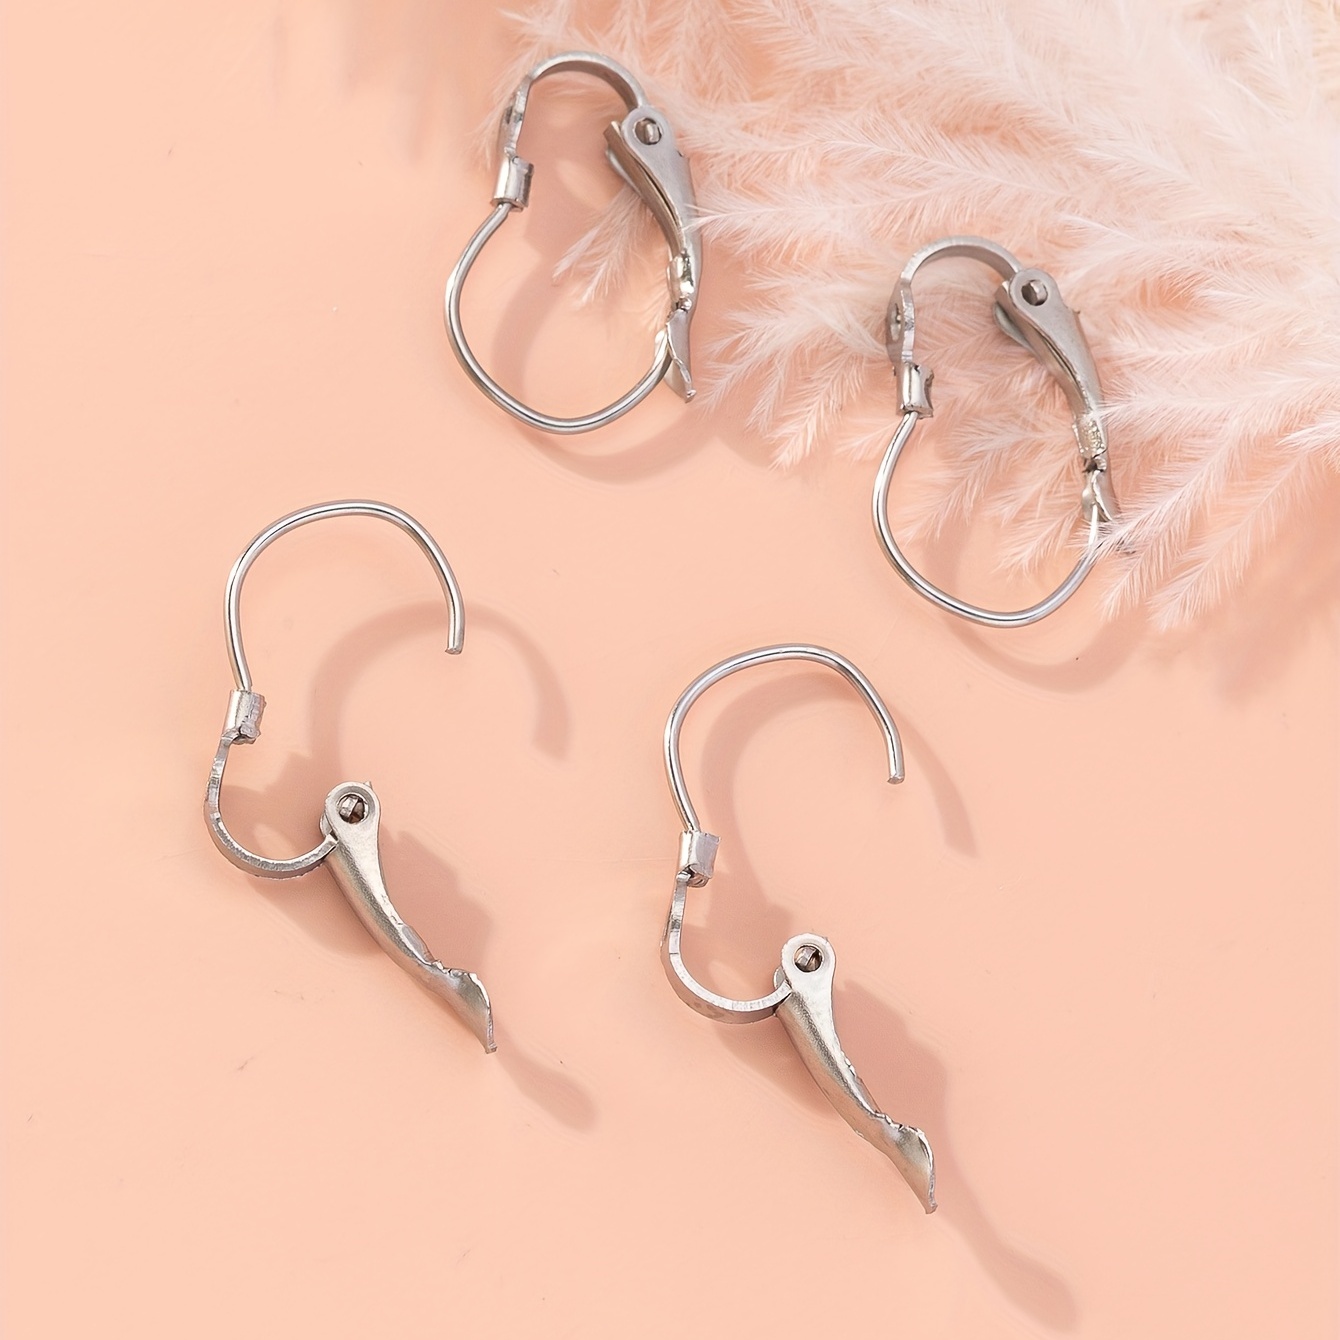 10pcs/set DIY Stainless Steel Earring Hook Hypoallergenic Leverback Earring  Hooks Ear Wire Connector For Earrings Making Jewelry Accessories